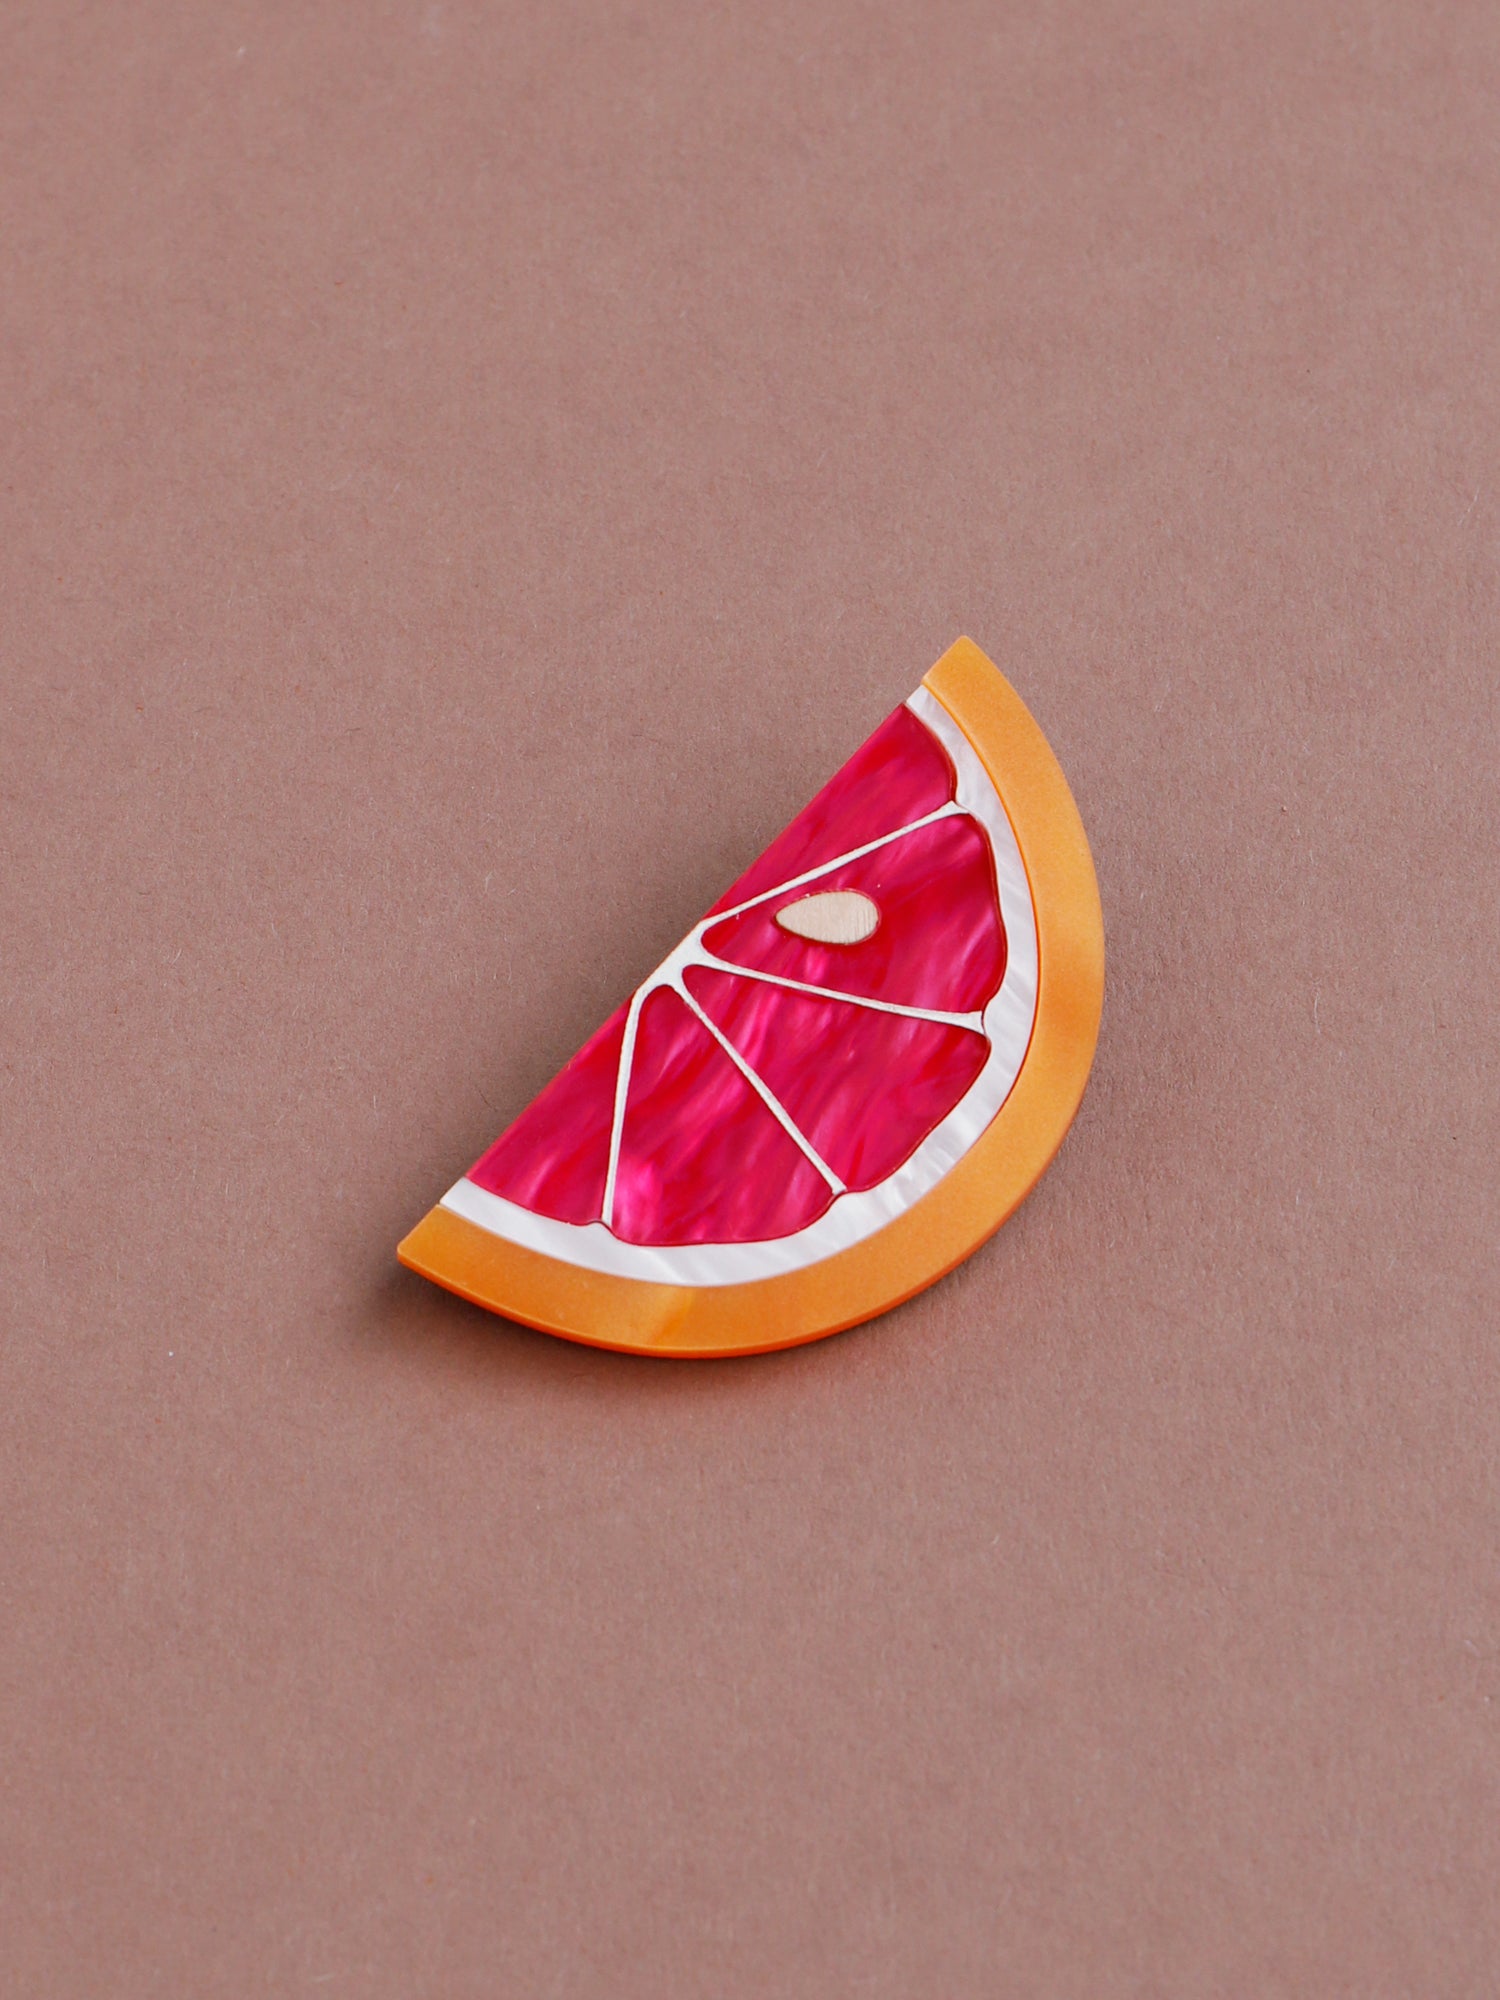 Grapefruit Slice Hair Clip